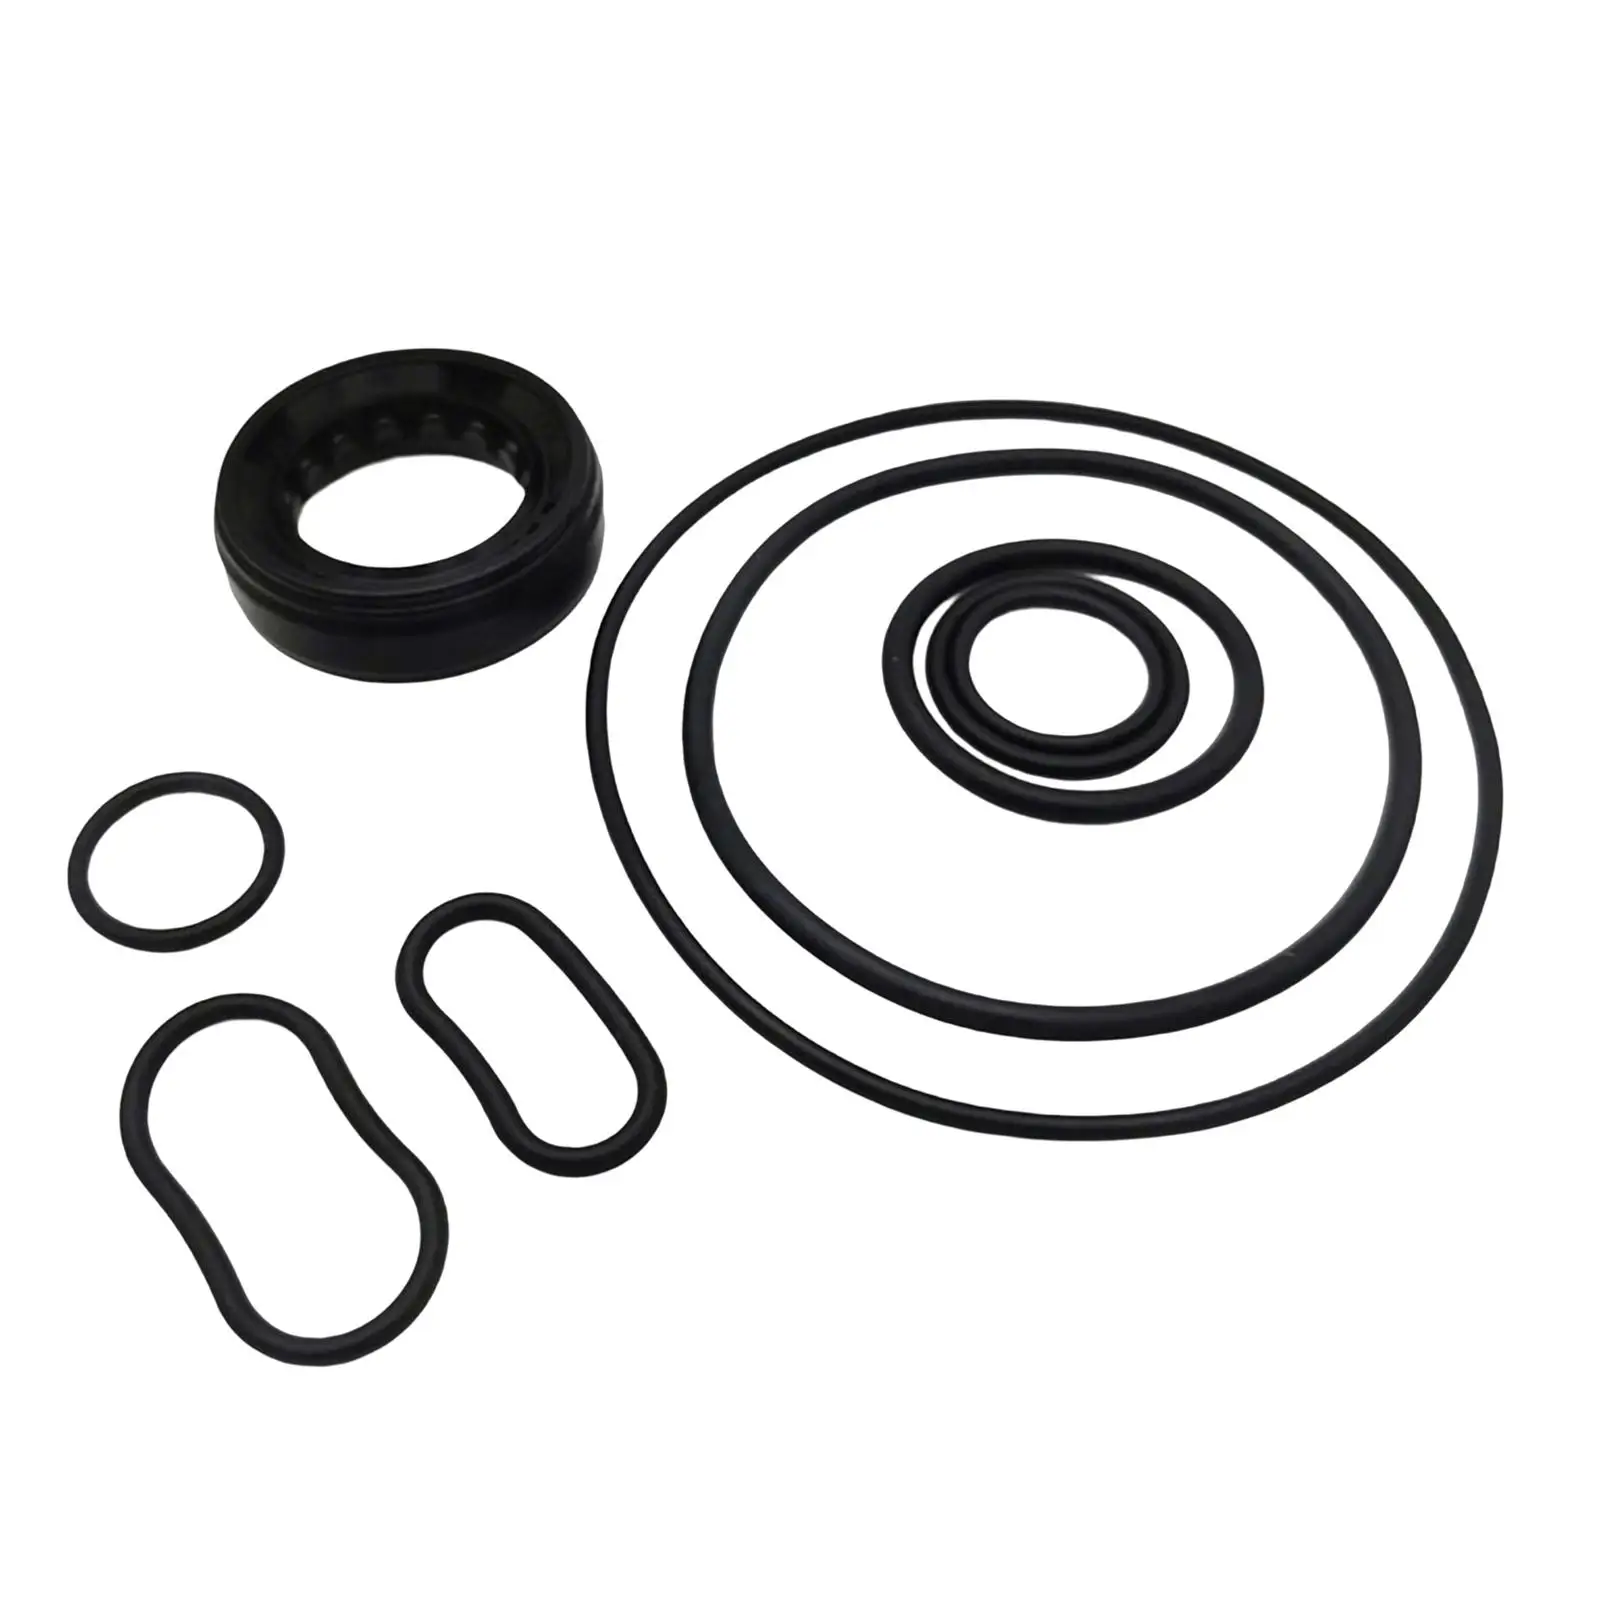 Car Power Steering Pump Seal Repair Set, 56110-Raa-A01 with O Rings Accessories